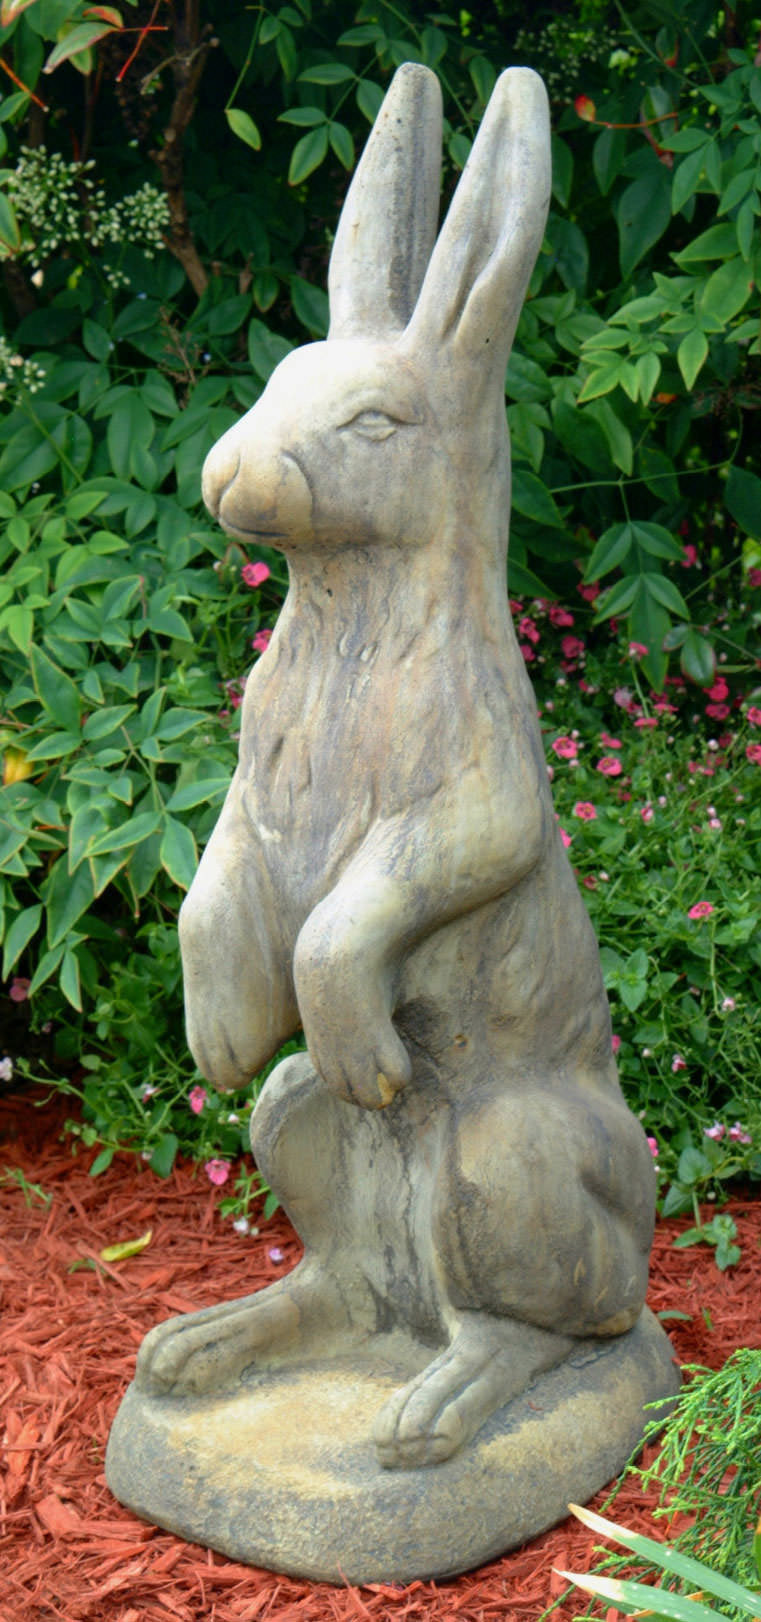 Unique Stone Guardian Rabbit Statue